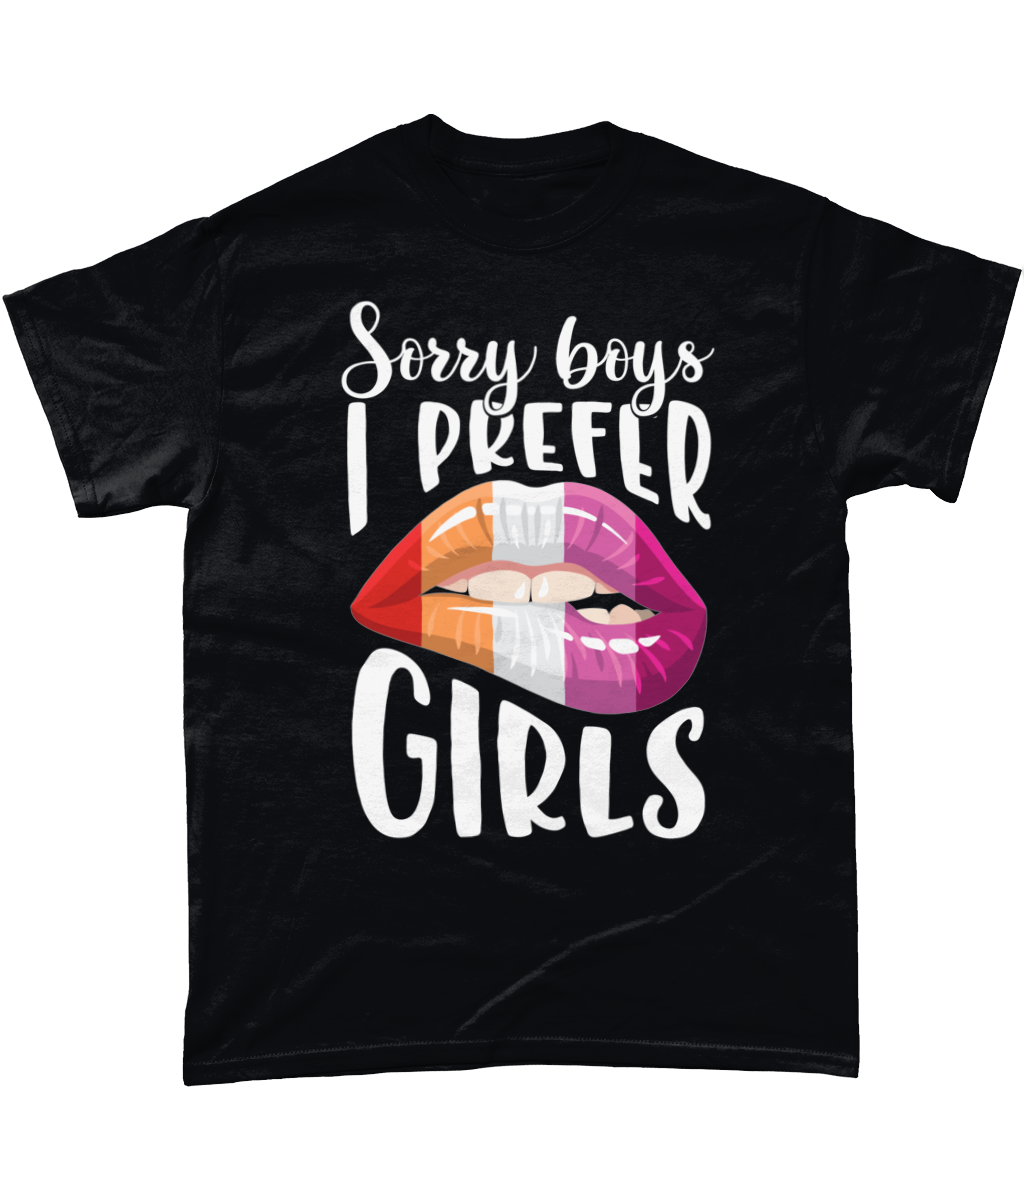 Sorry boys I prefer girls lesbian t-shirt